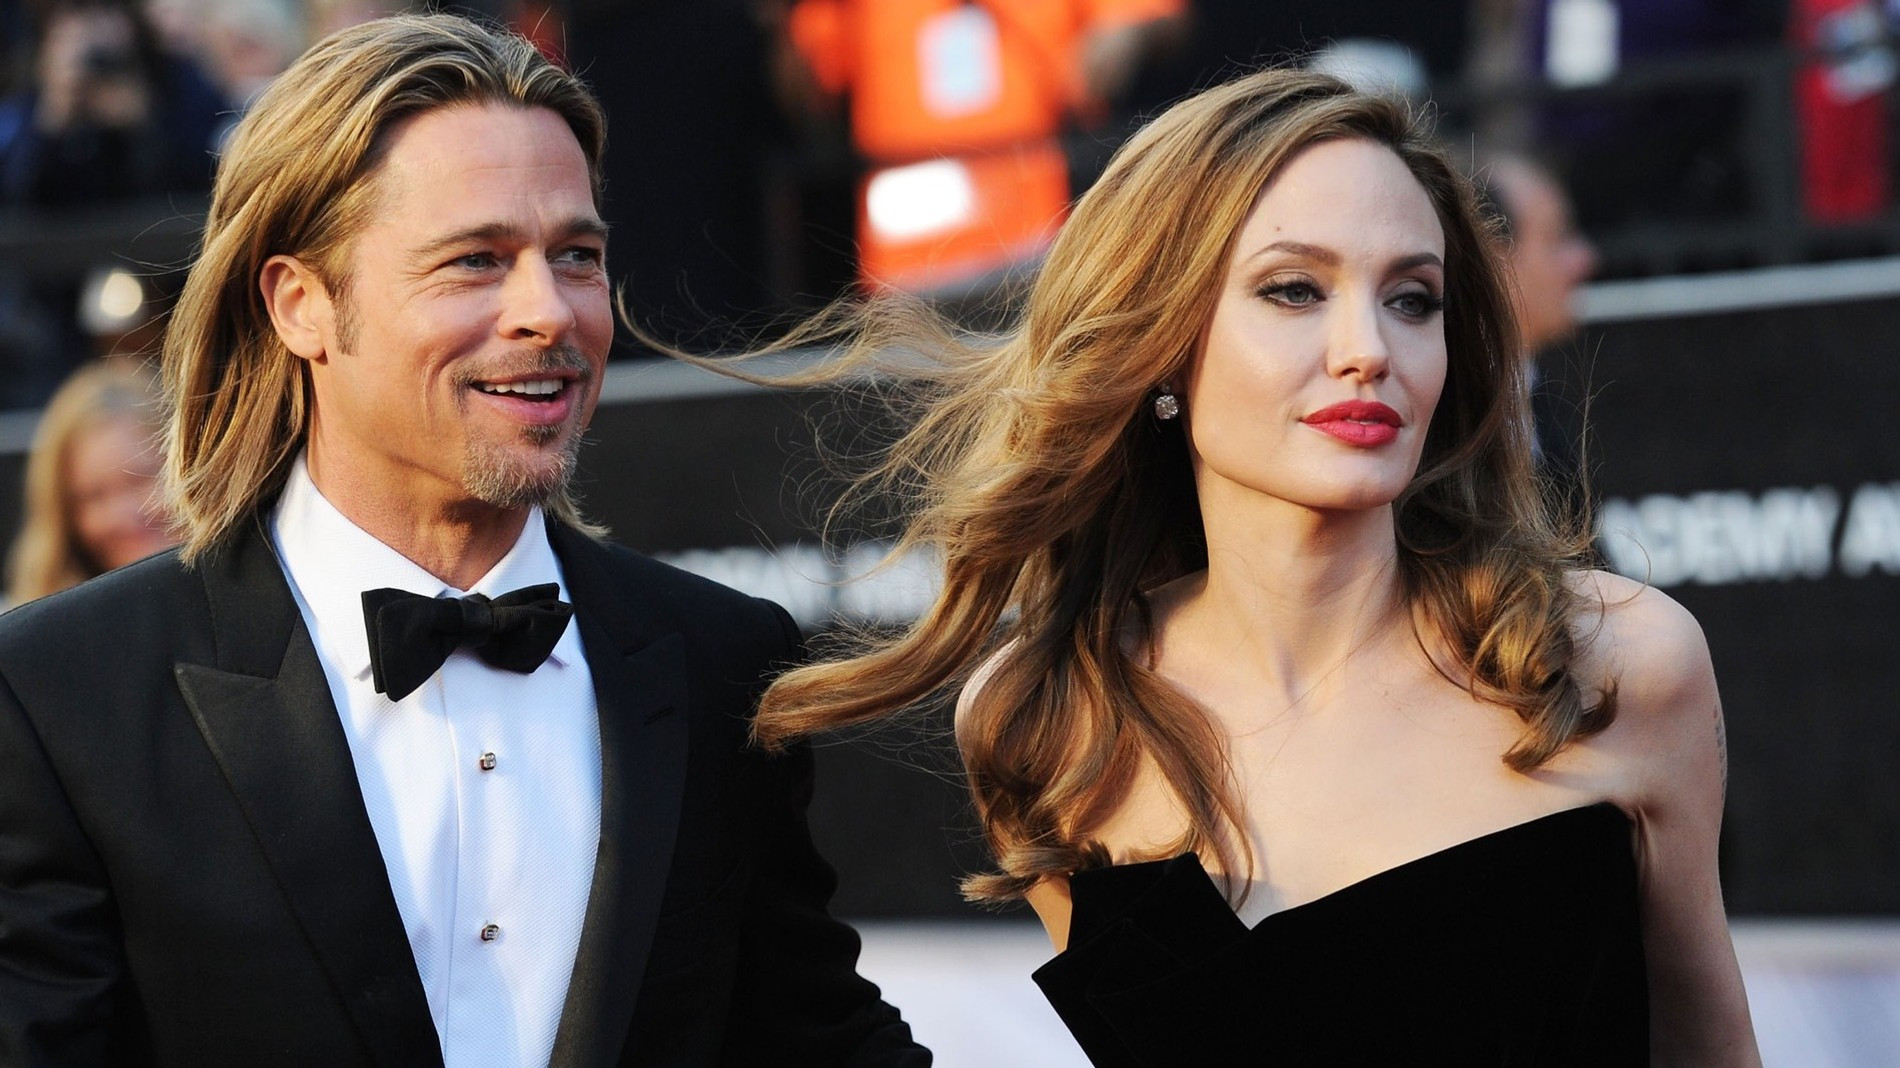 Брэд Питт и Анджелина Джоли
Фото: Getty Images